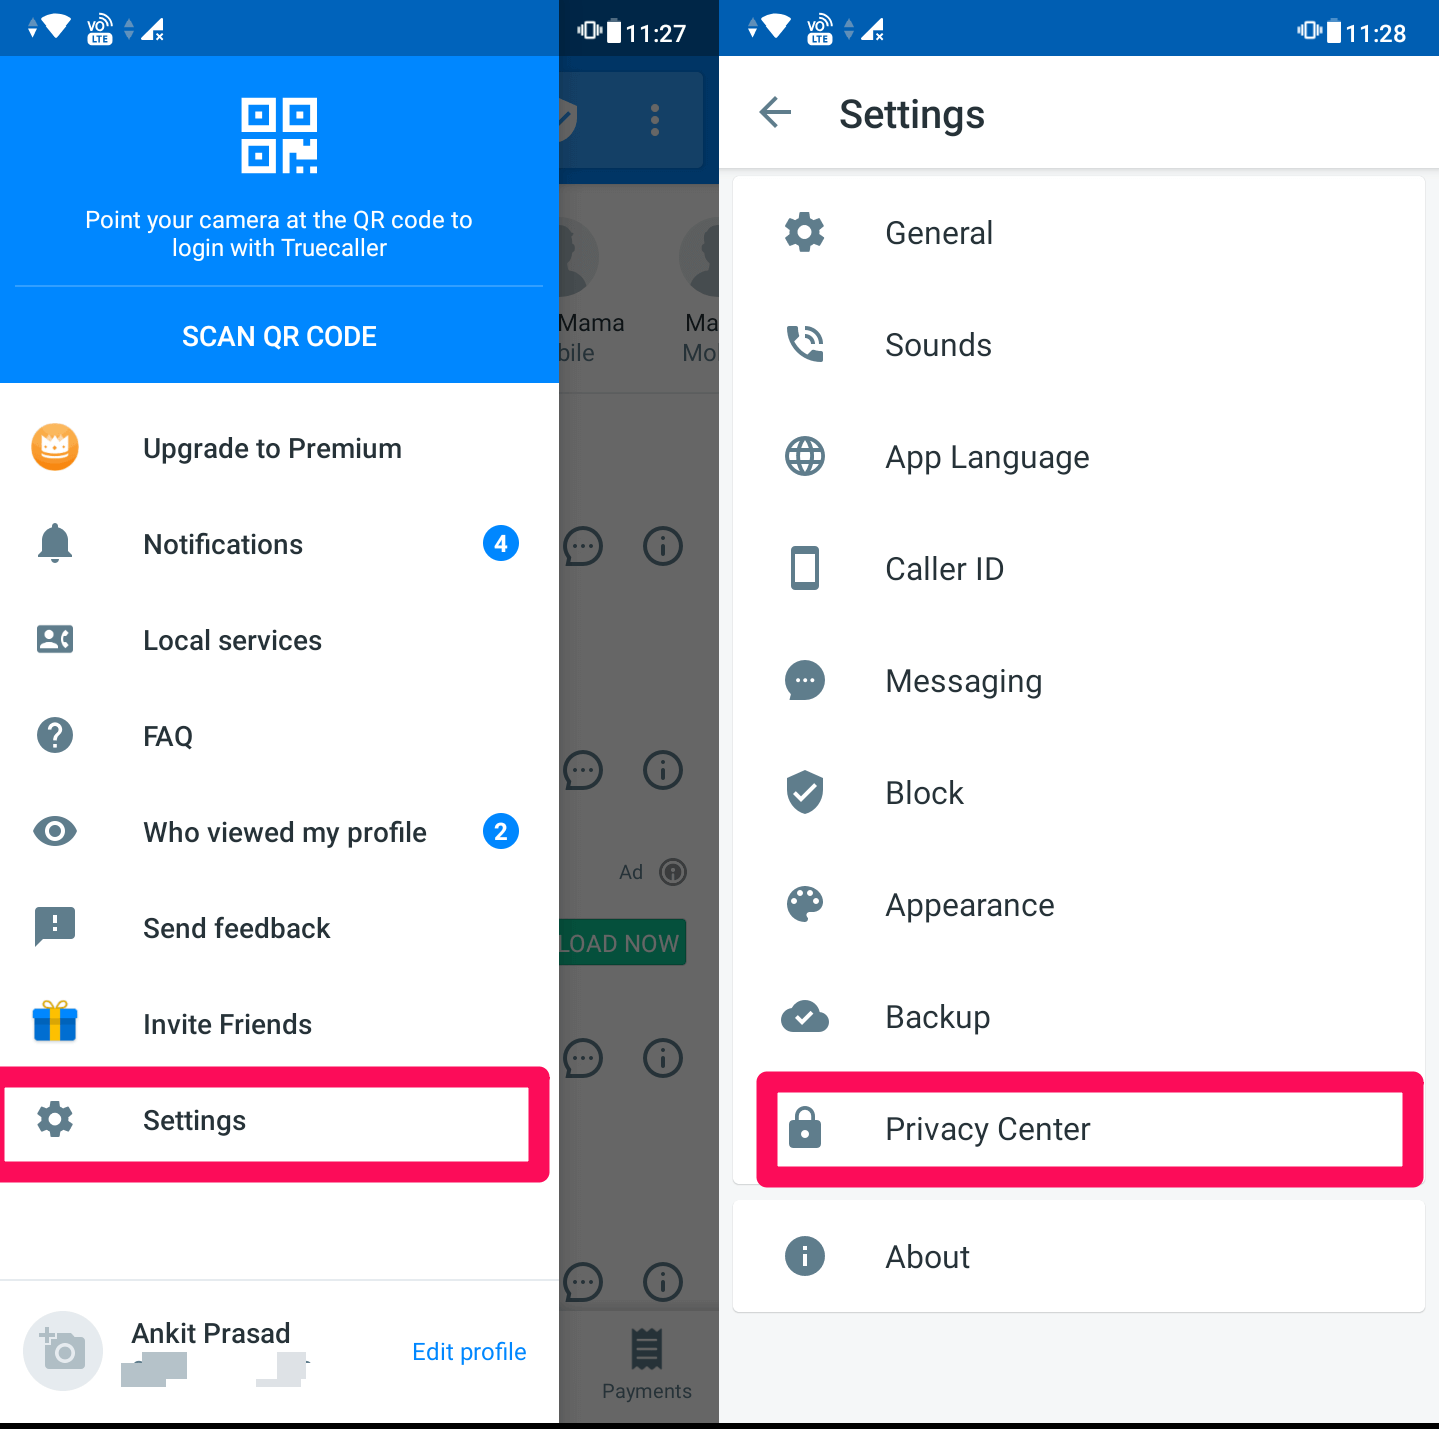 Privacy center under settings option in Truecaller app